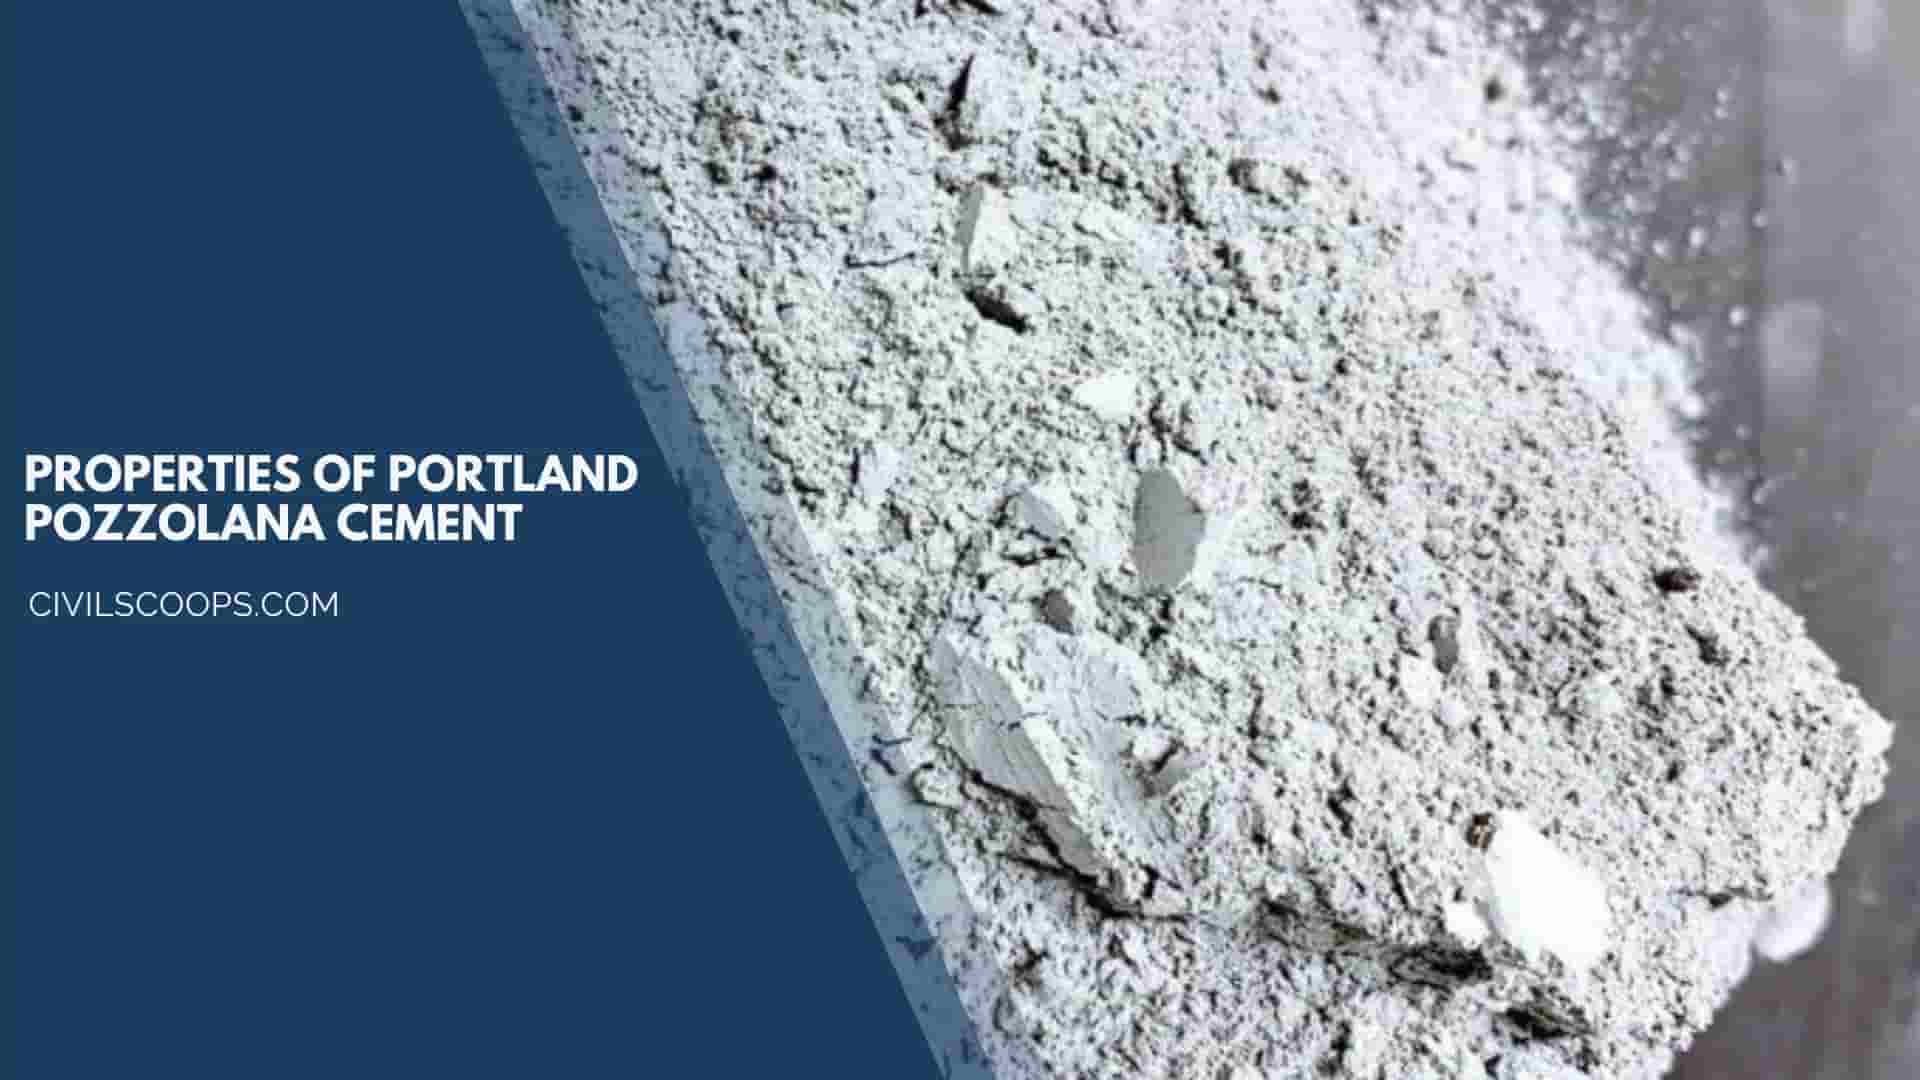 Properties of Portland Pozzolana Cement